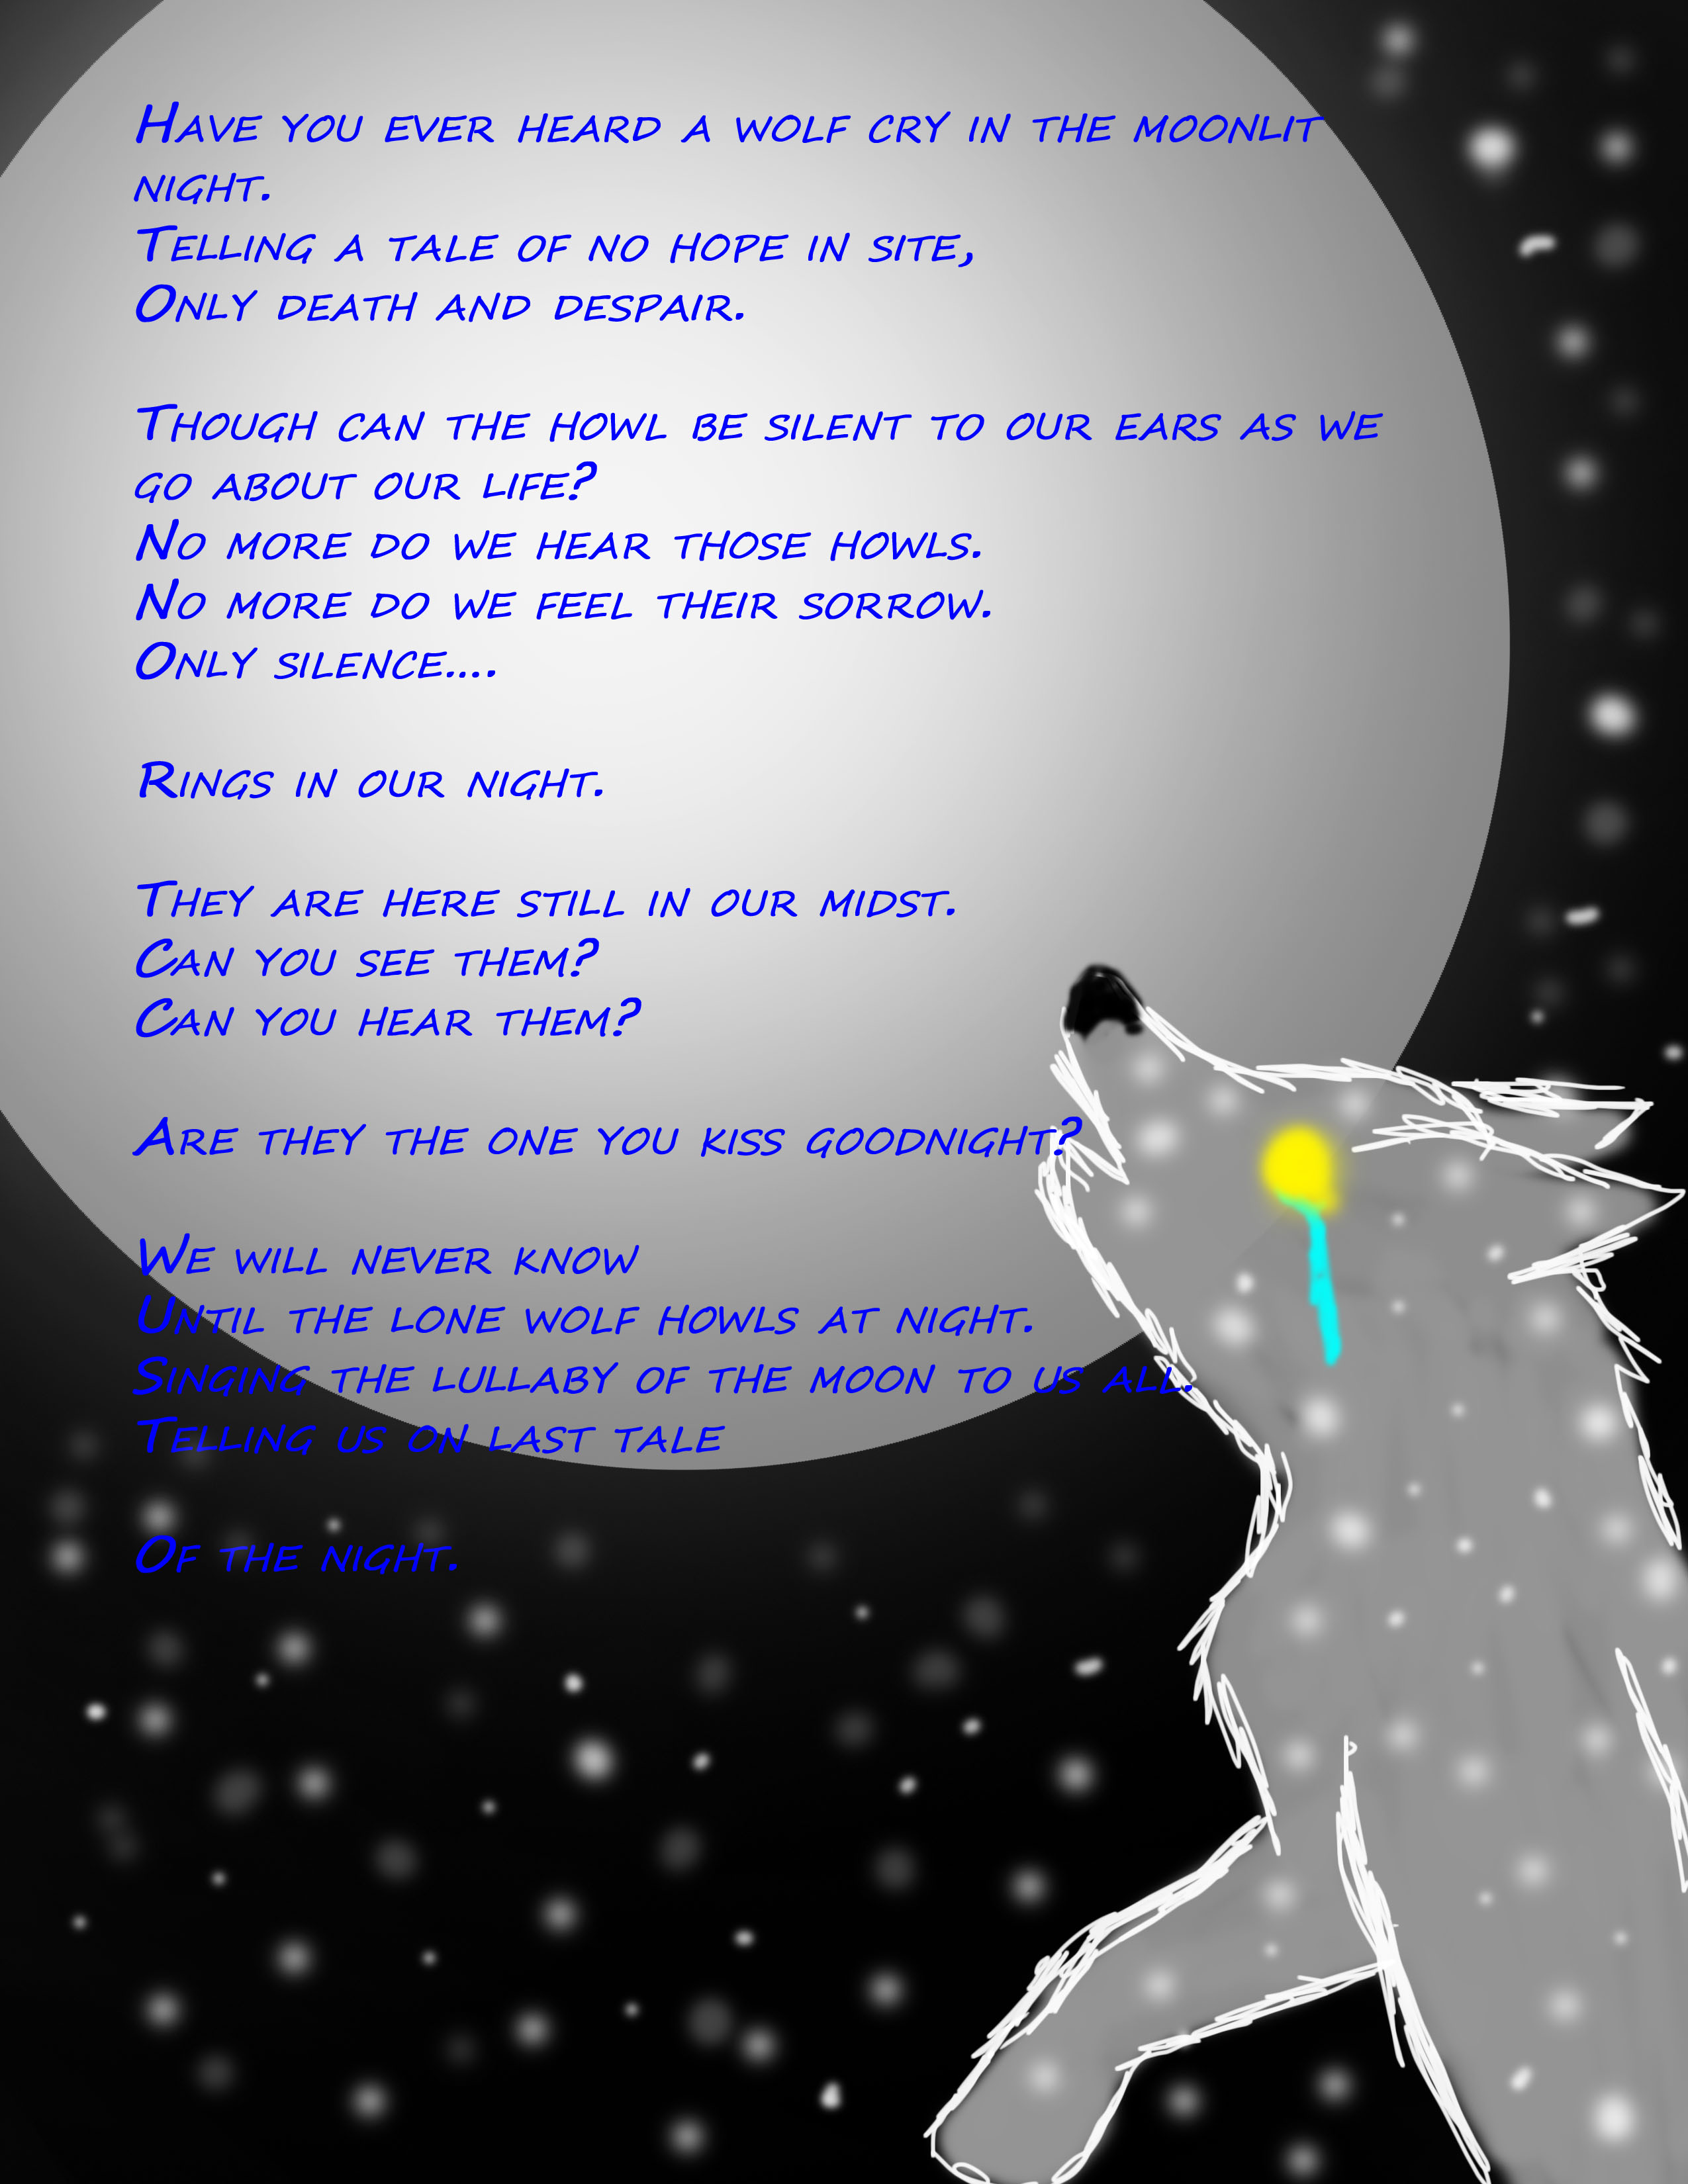 lone wolf poem